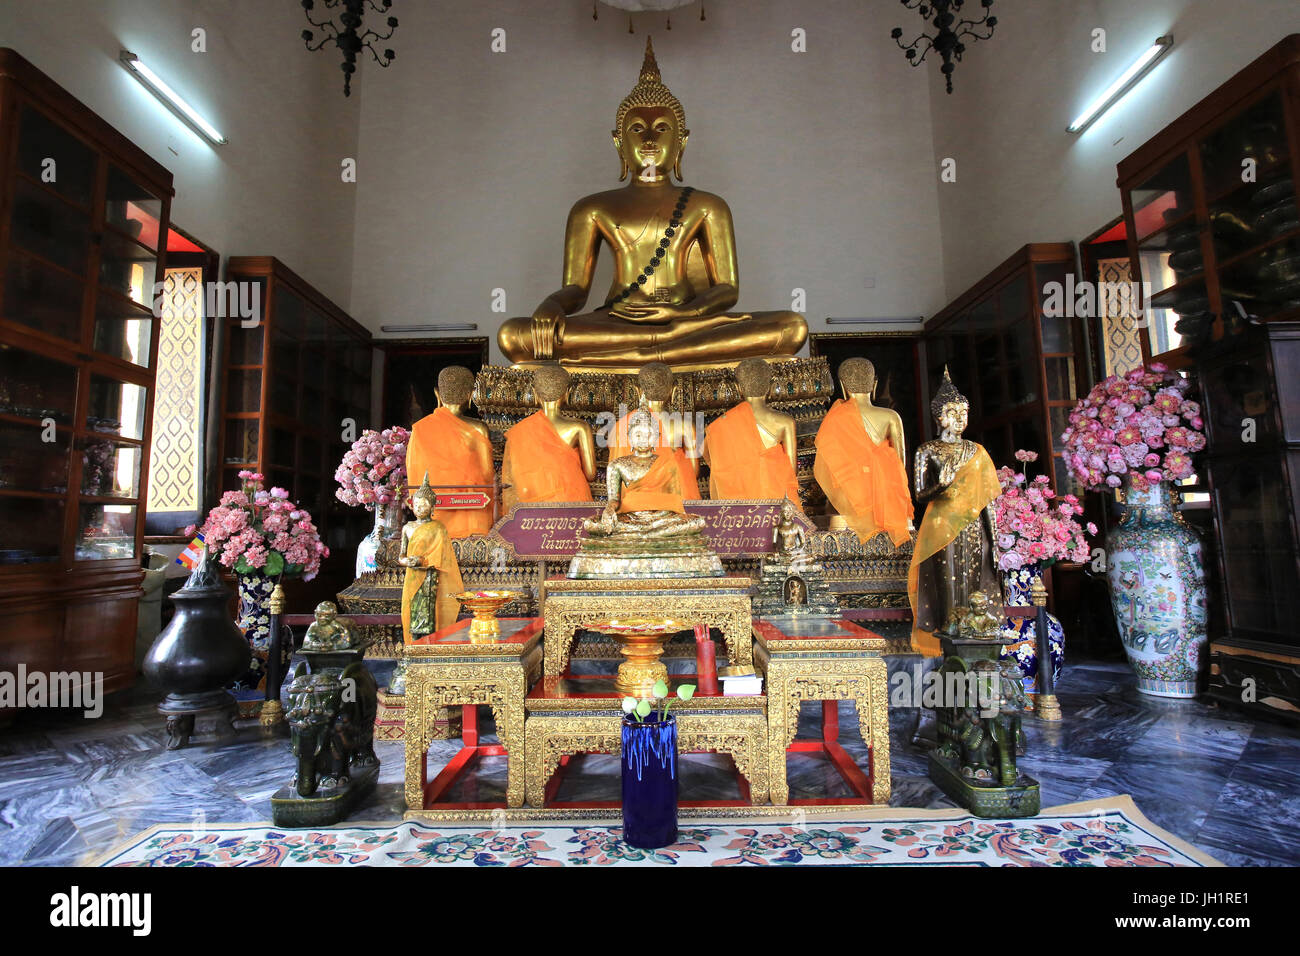 Buddha gave his first sermon to five disciples in Benares. The South Vihara. Wat Pho - Wat Phra Chettuphon.  1788. Bangkok.  Thailand. Stock Photo